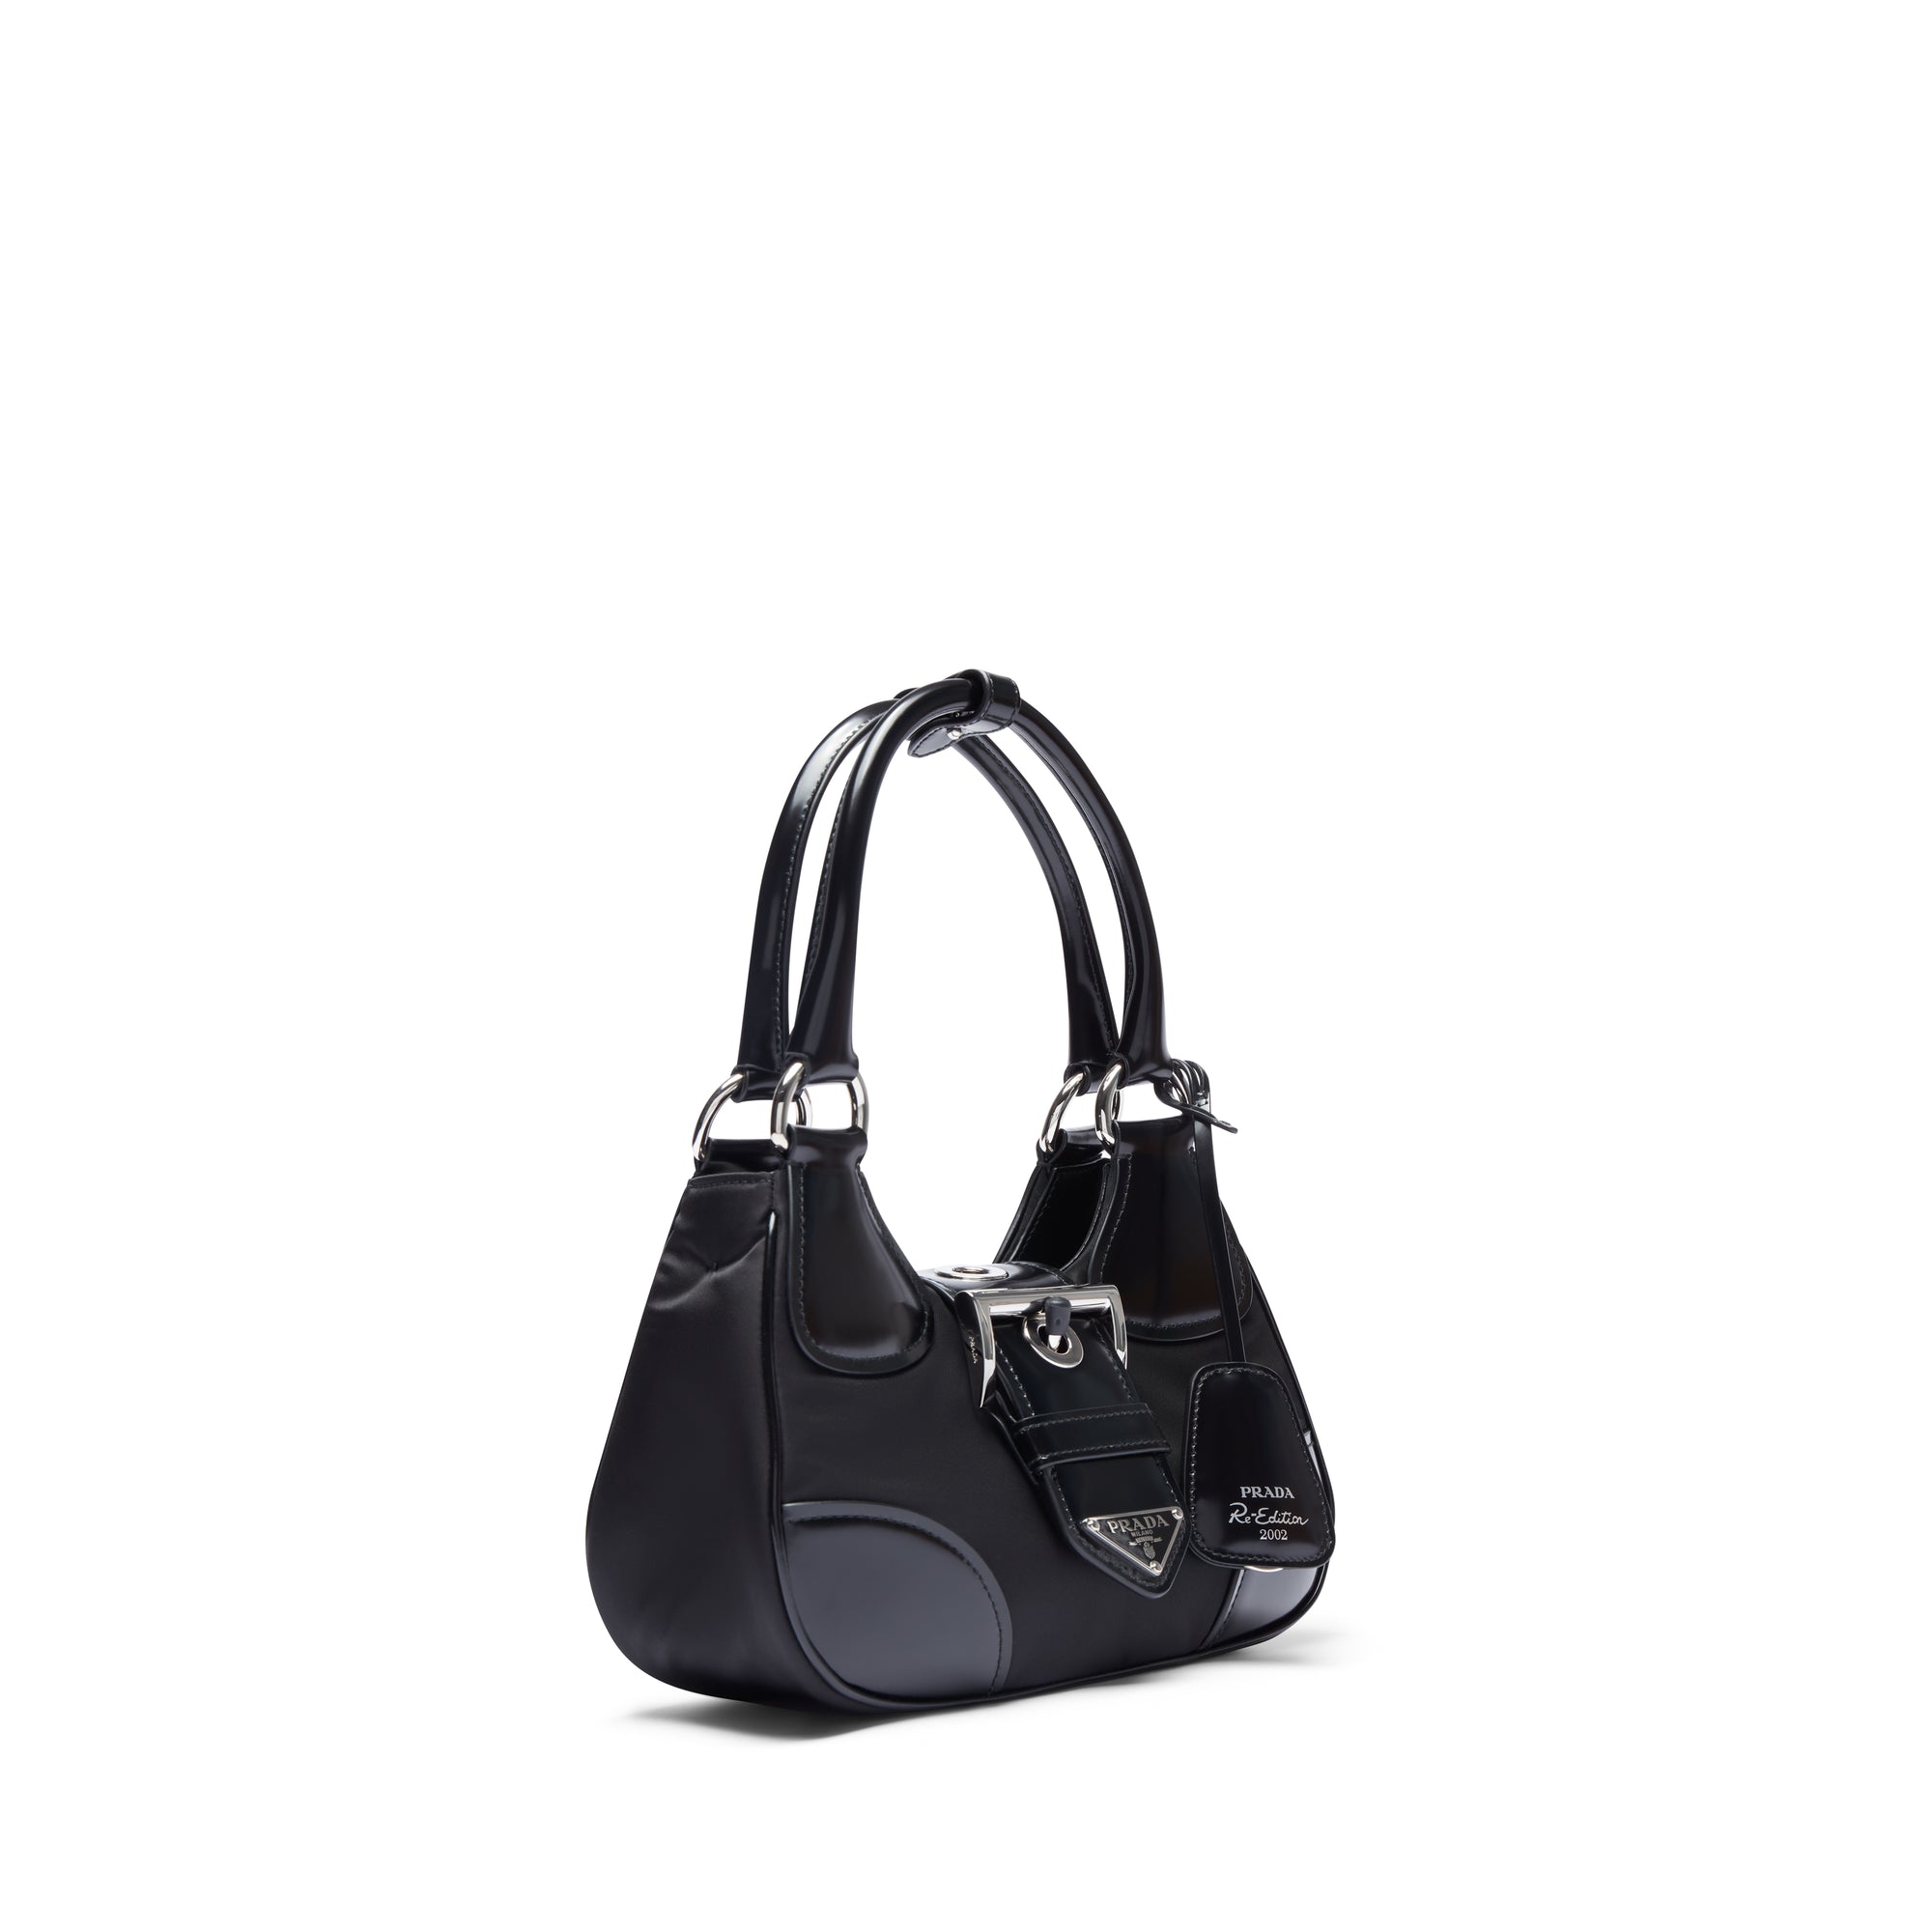 Prada - Women’s Moon Re-Nylon and Leather Bag - (Black) view 2